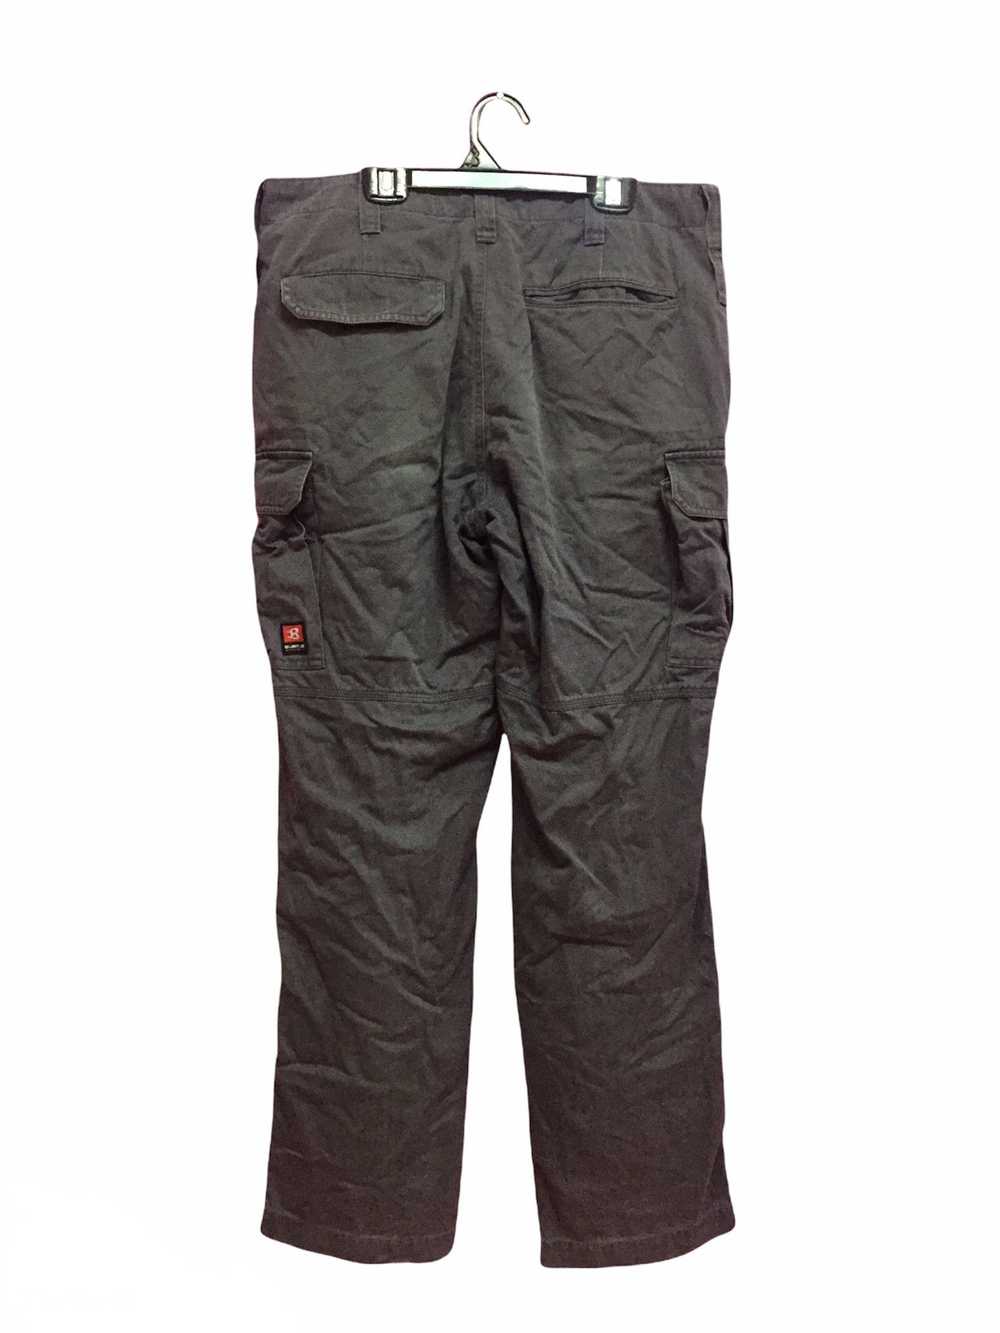 Japanese Brand Burtle Workwear Cargo Pants - image 2